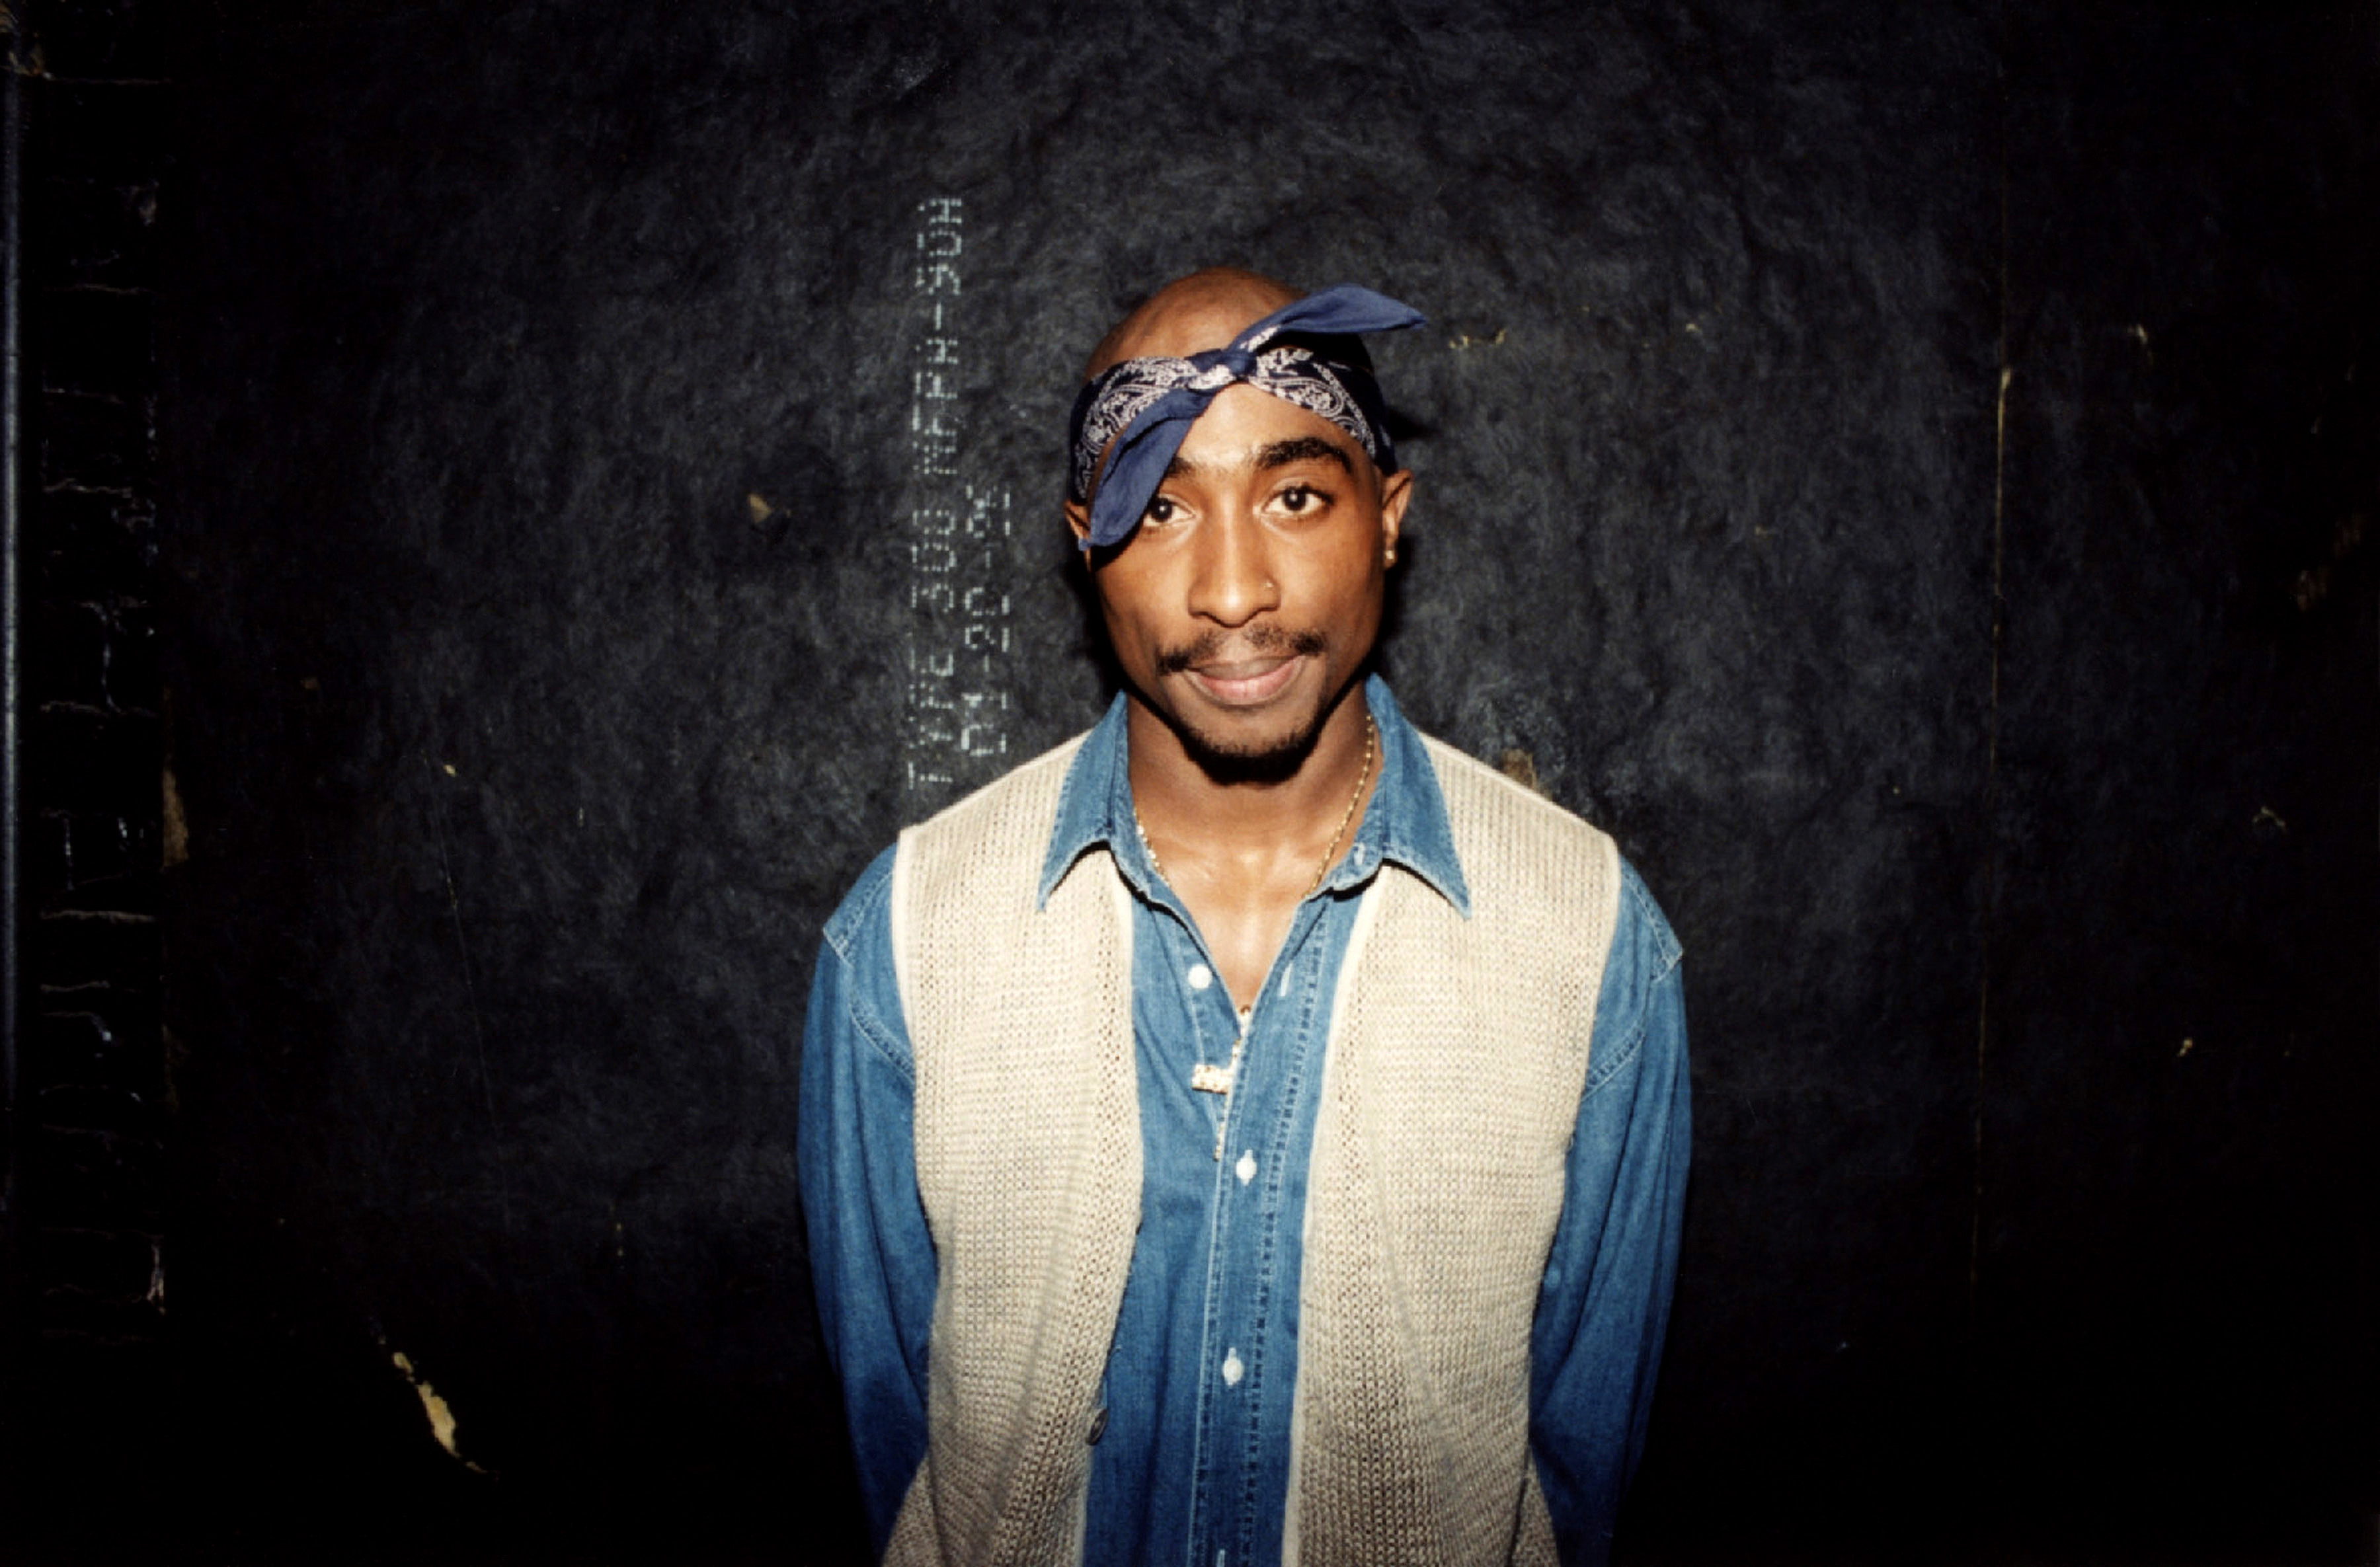 Der legendäre Rapper Tupac wurde im September 1996 in Las Vegas abgeschossen